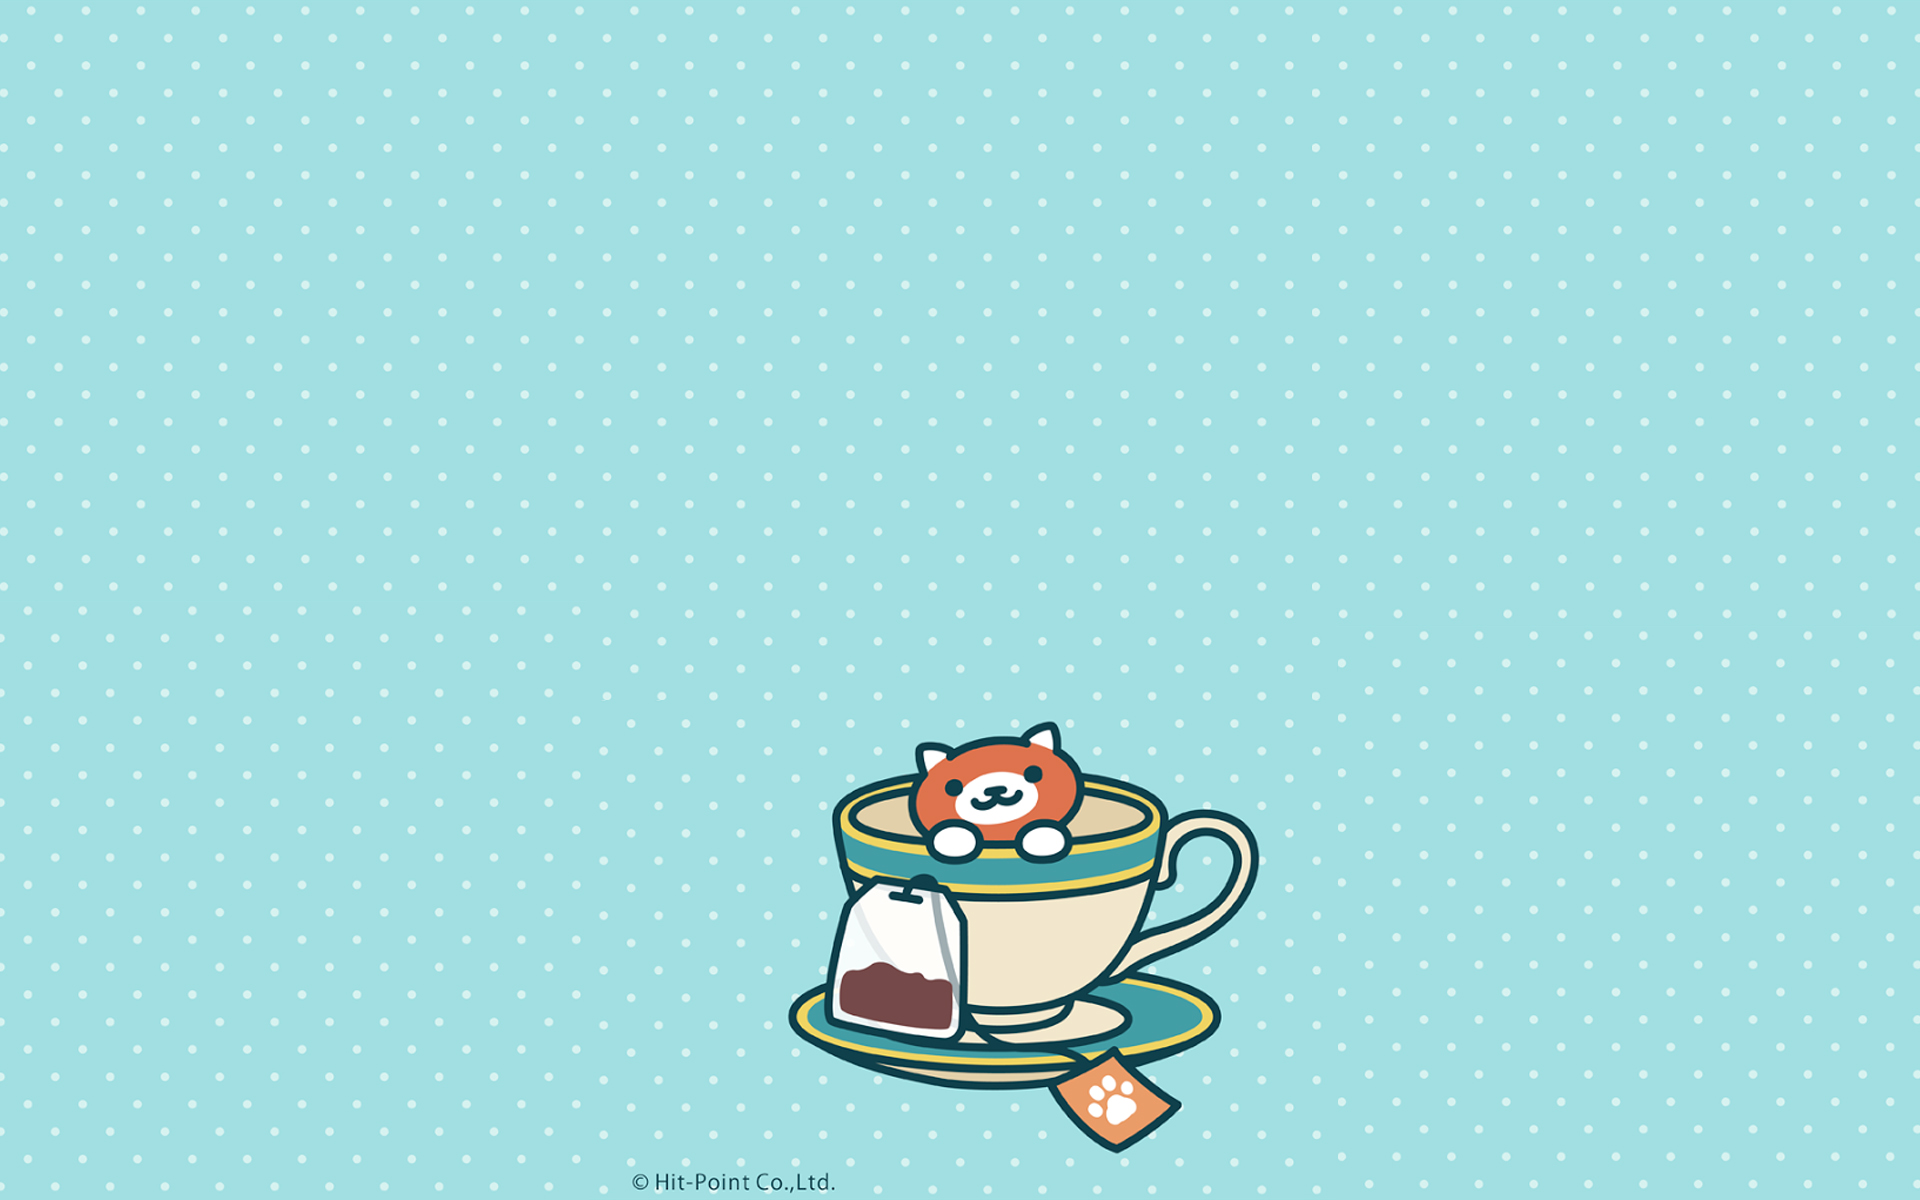 Ginger Tea by Neko Atsume